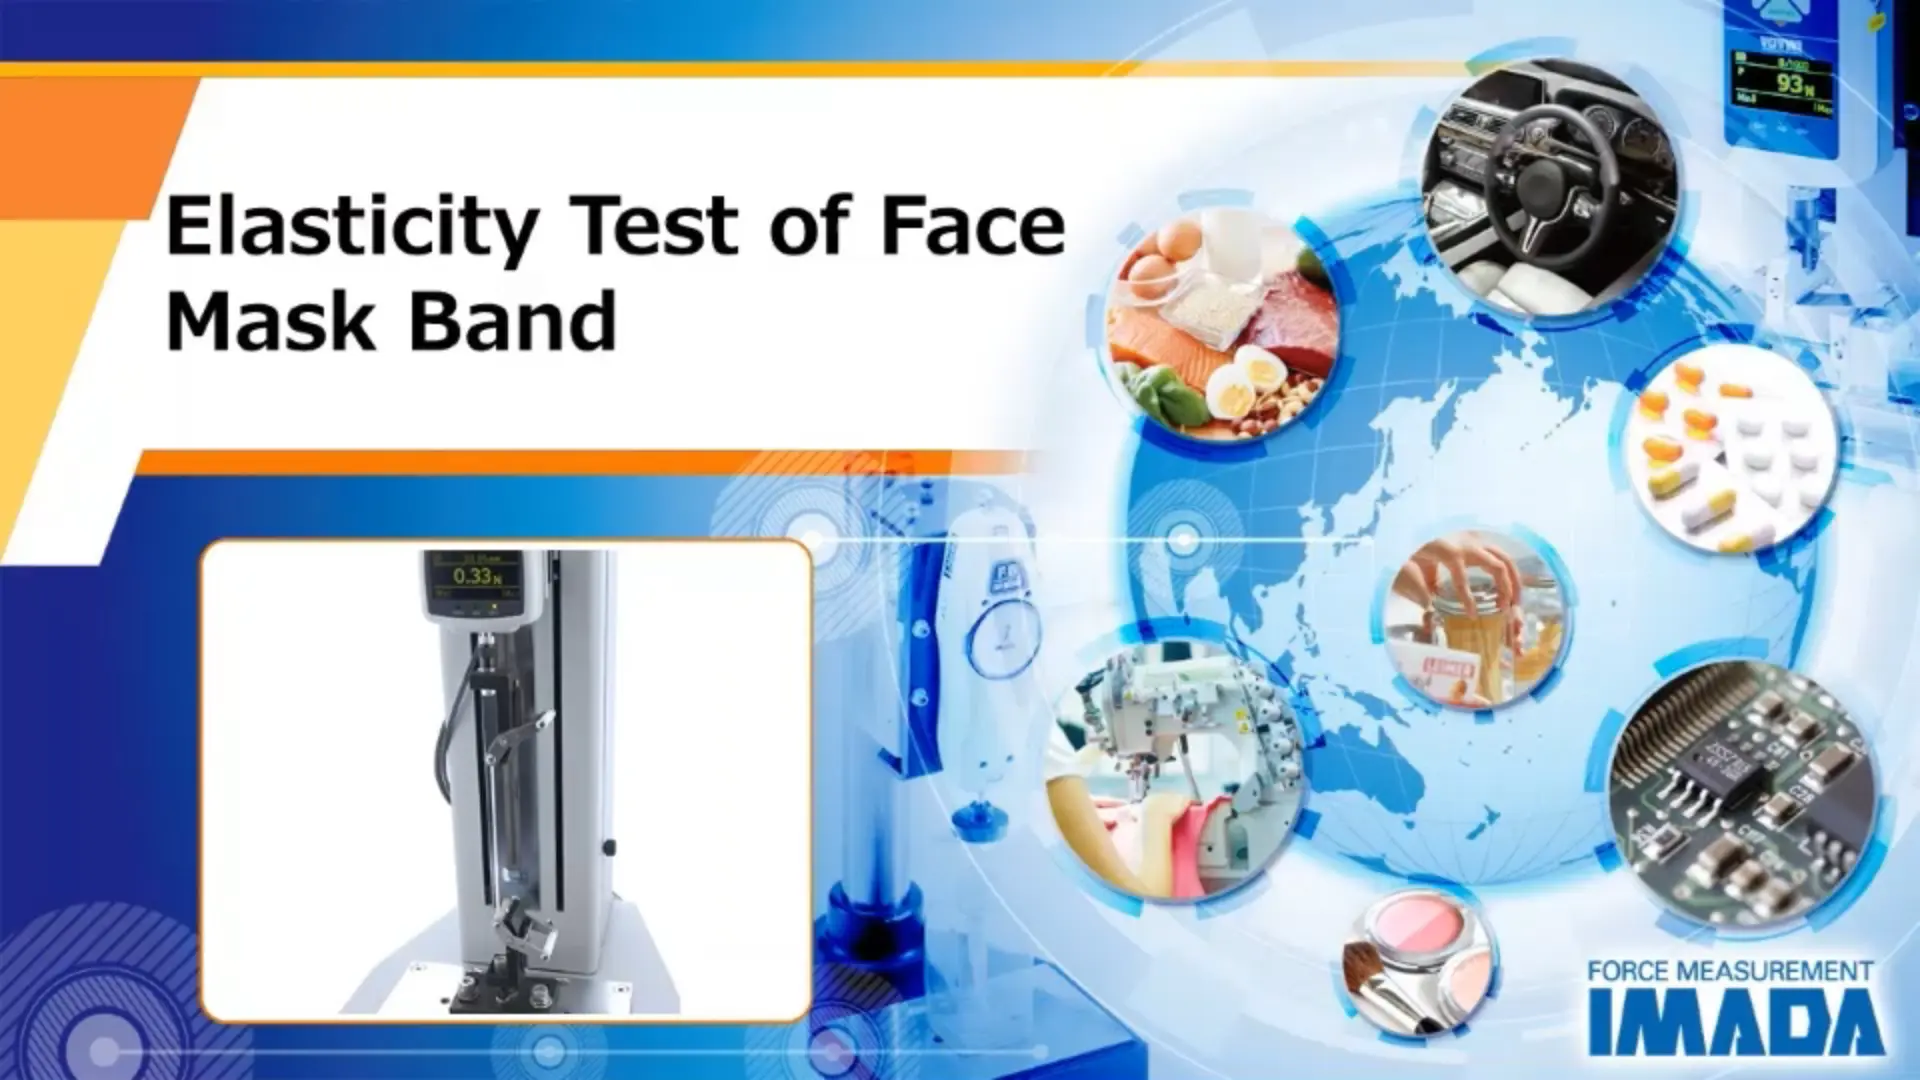 Elasticity test of face mask band